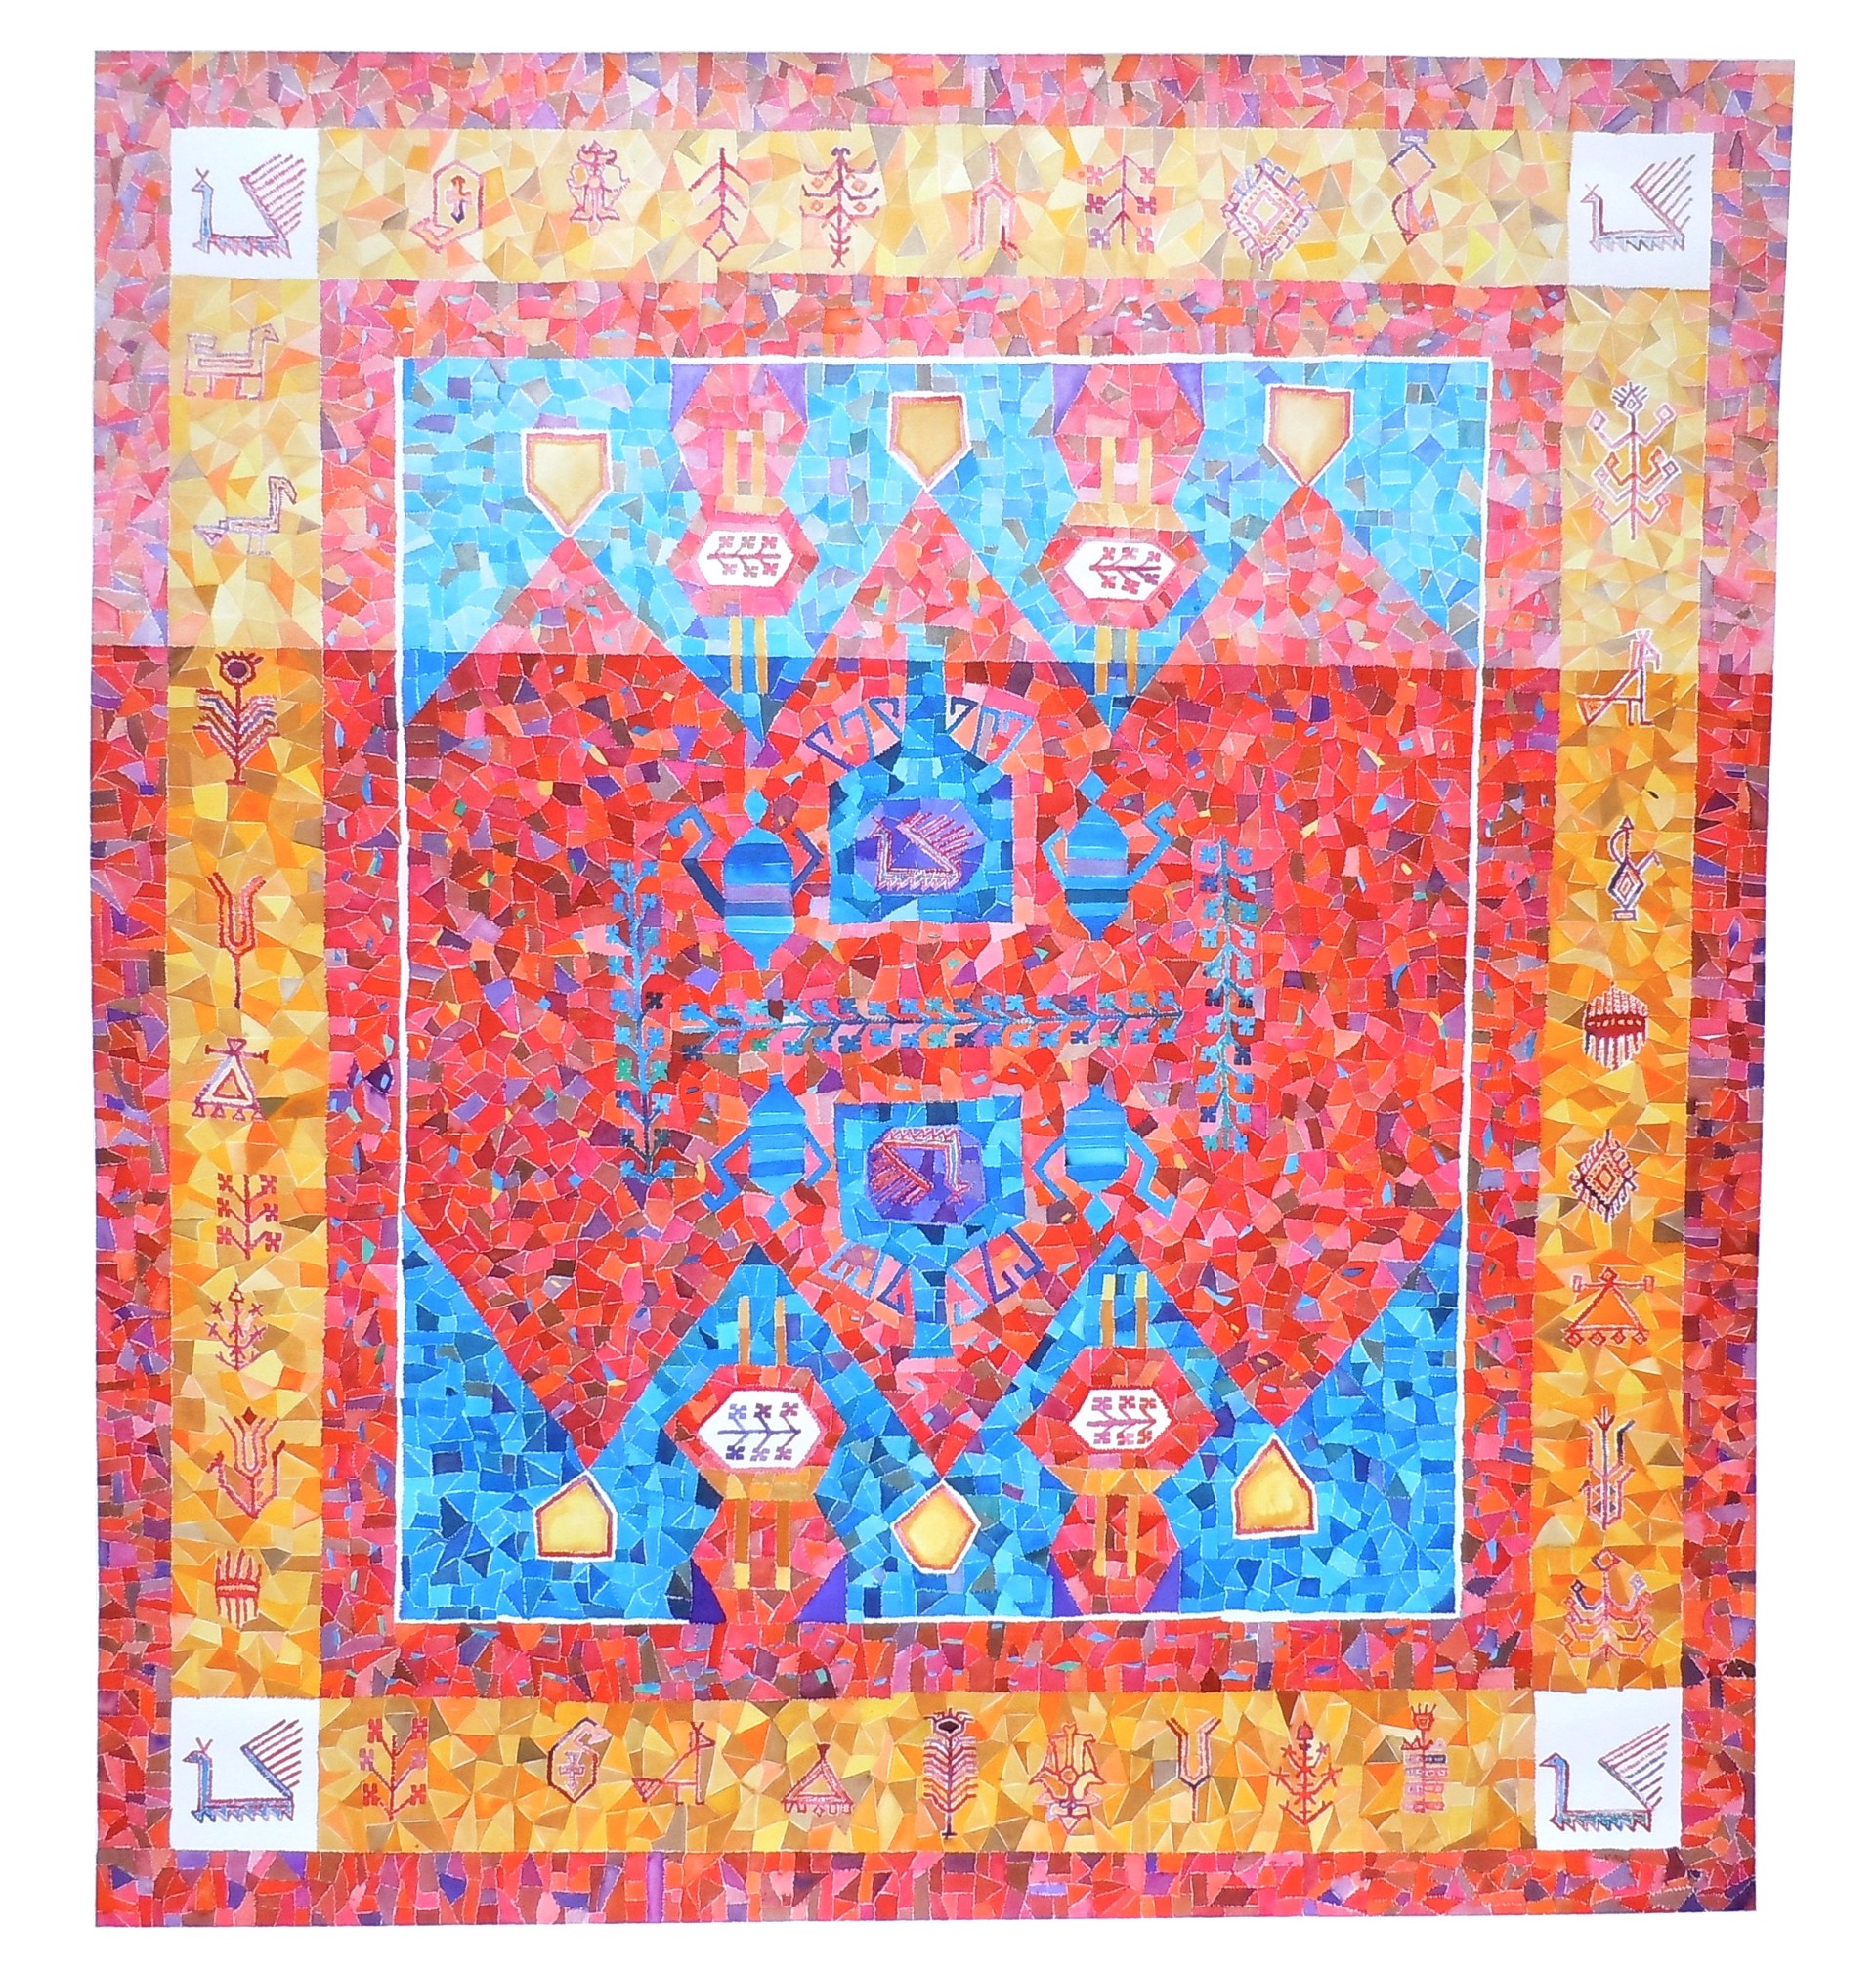 Koliayeh Carpet with Abrash by Missy Dunaway